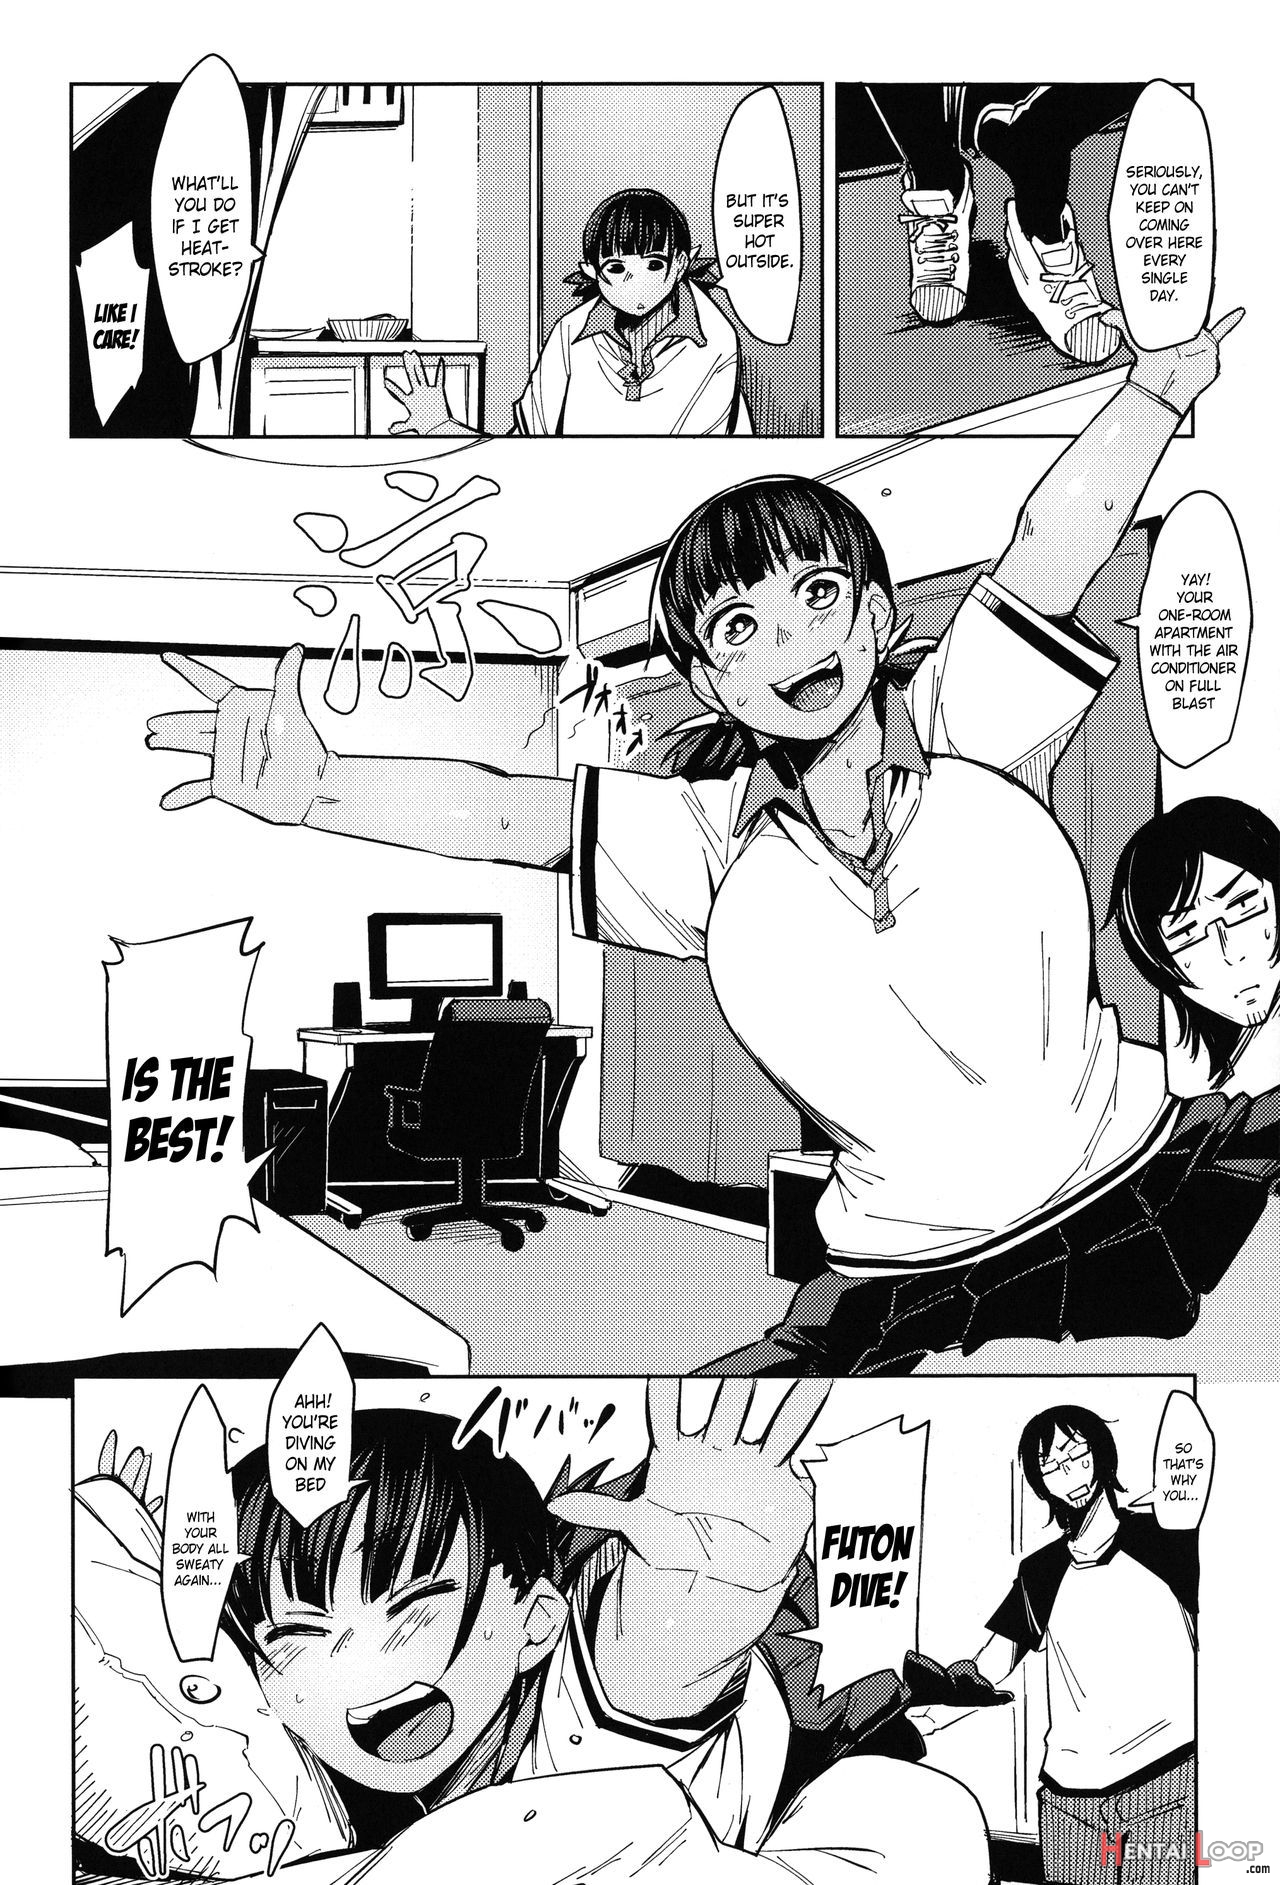 Kakizaki Fitness page 2